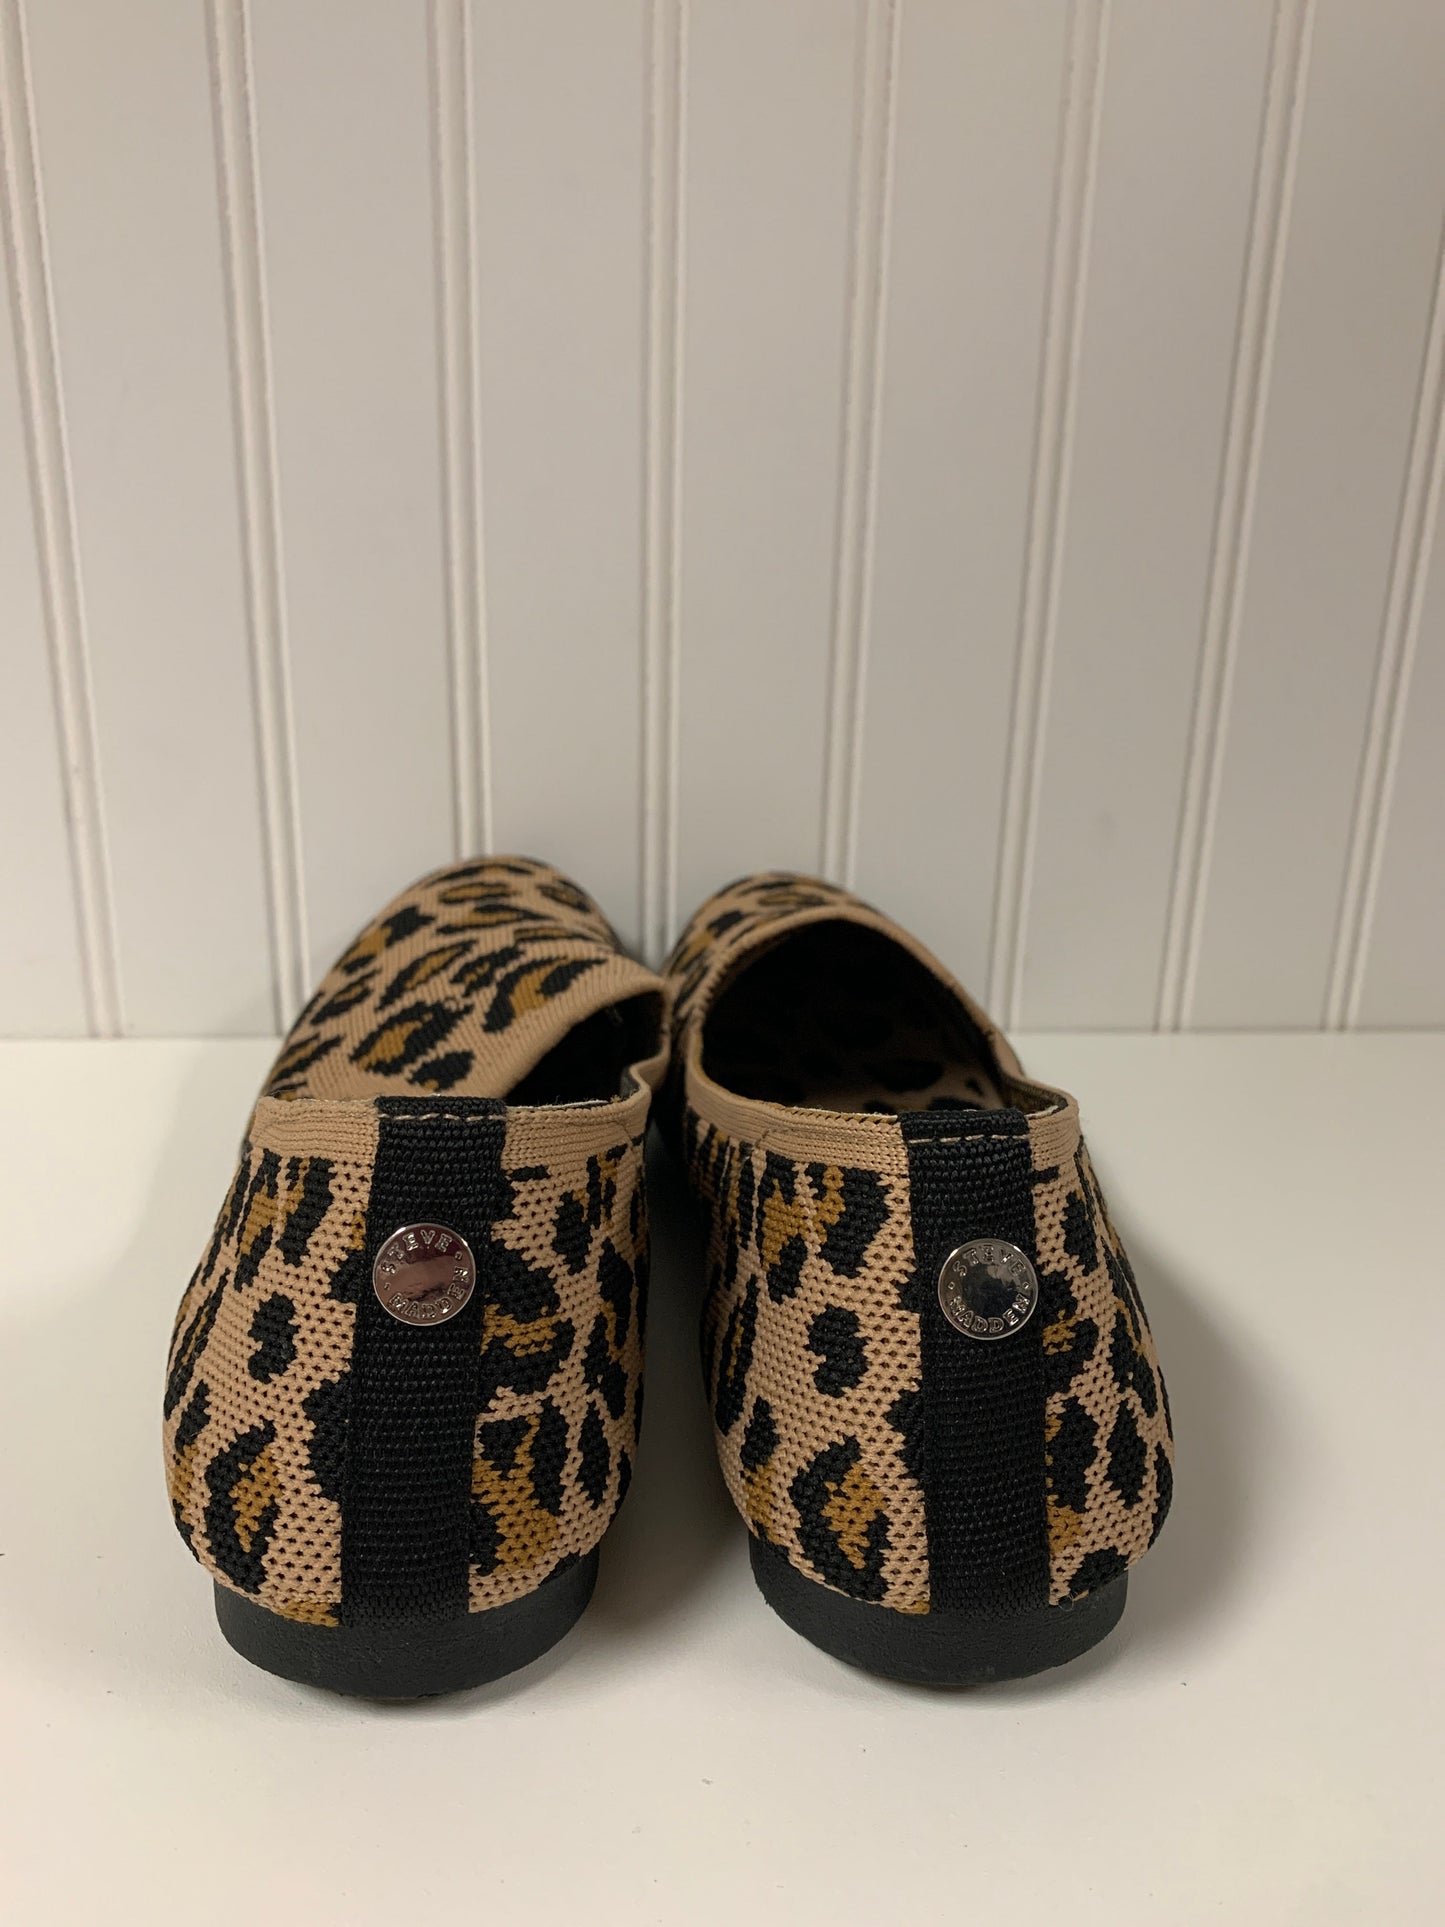 Animal Print Shoes Flats Steve Madden, Size 8